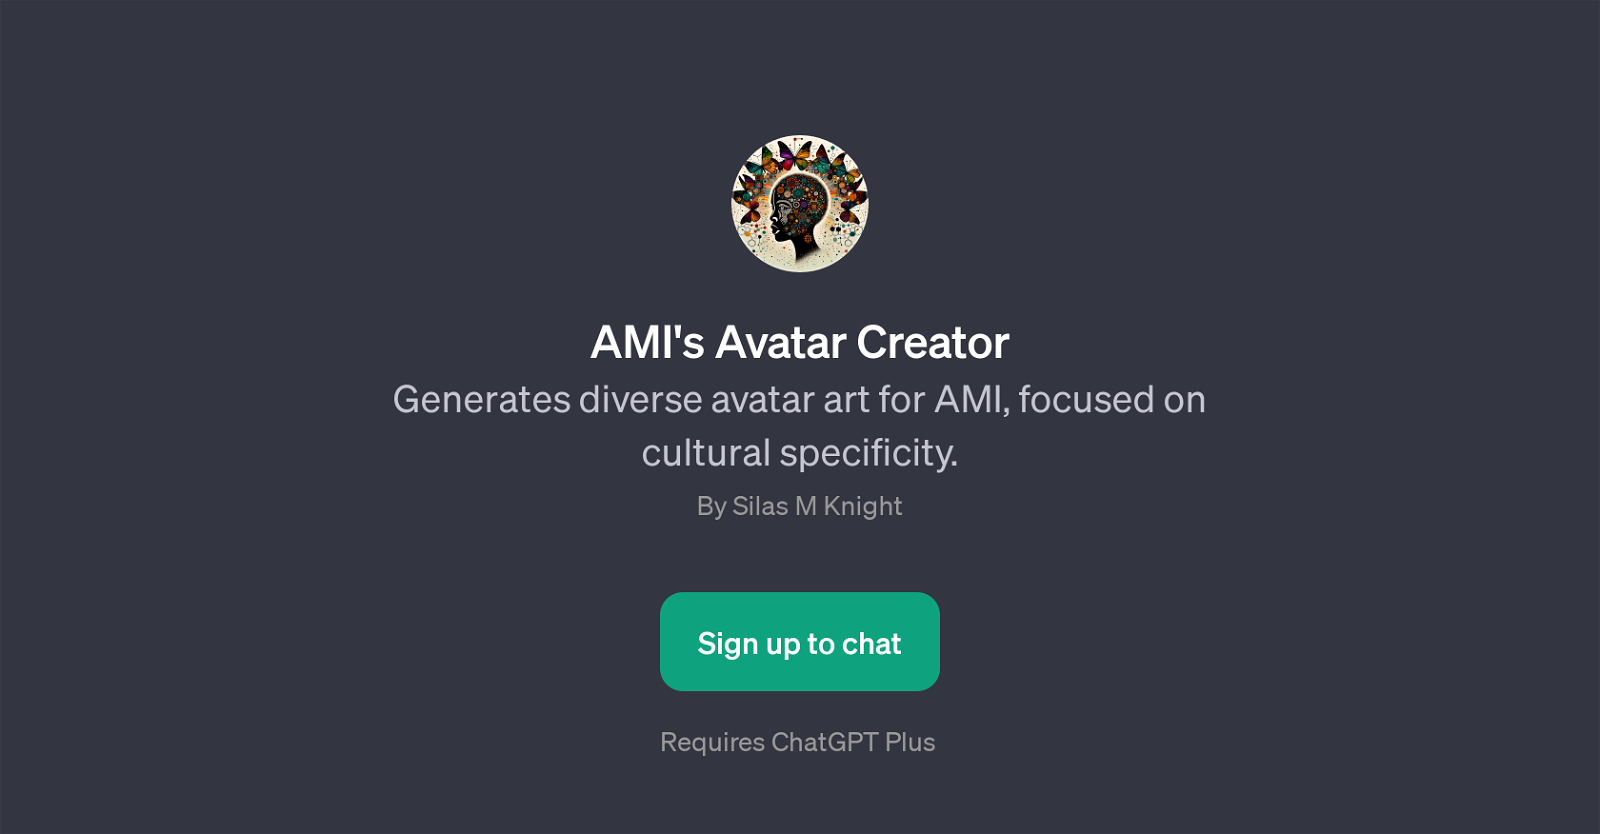 AMI's Avatar Creator website